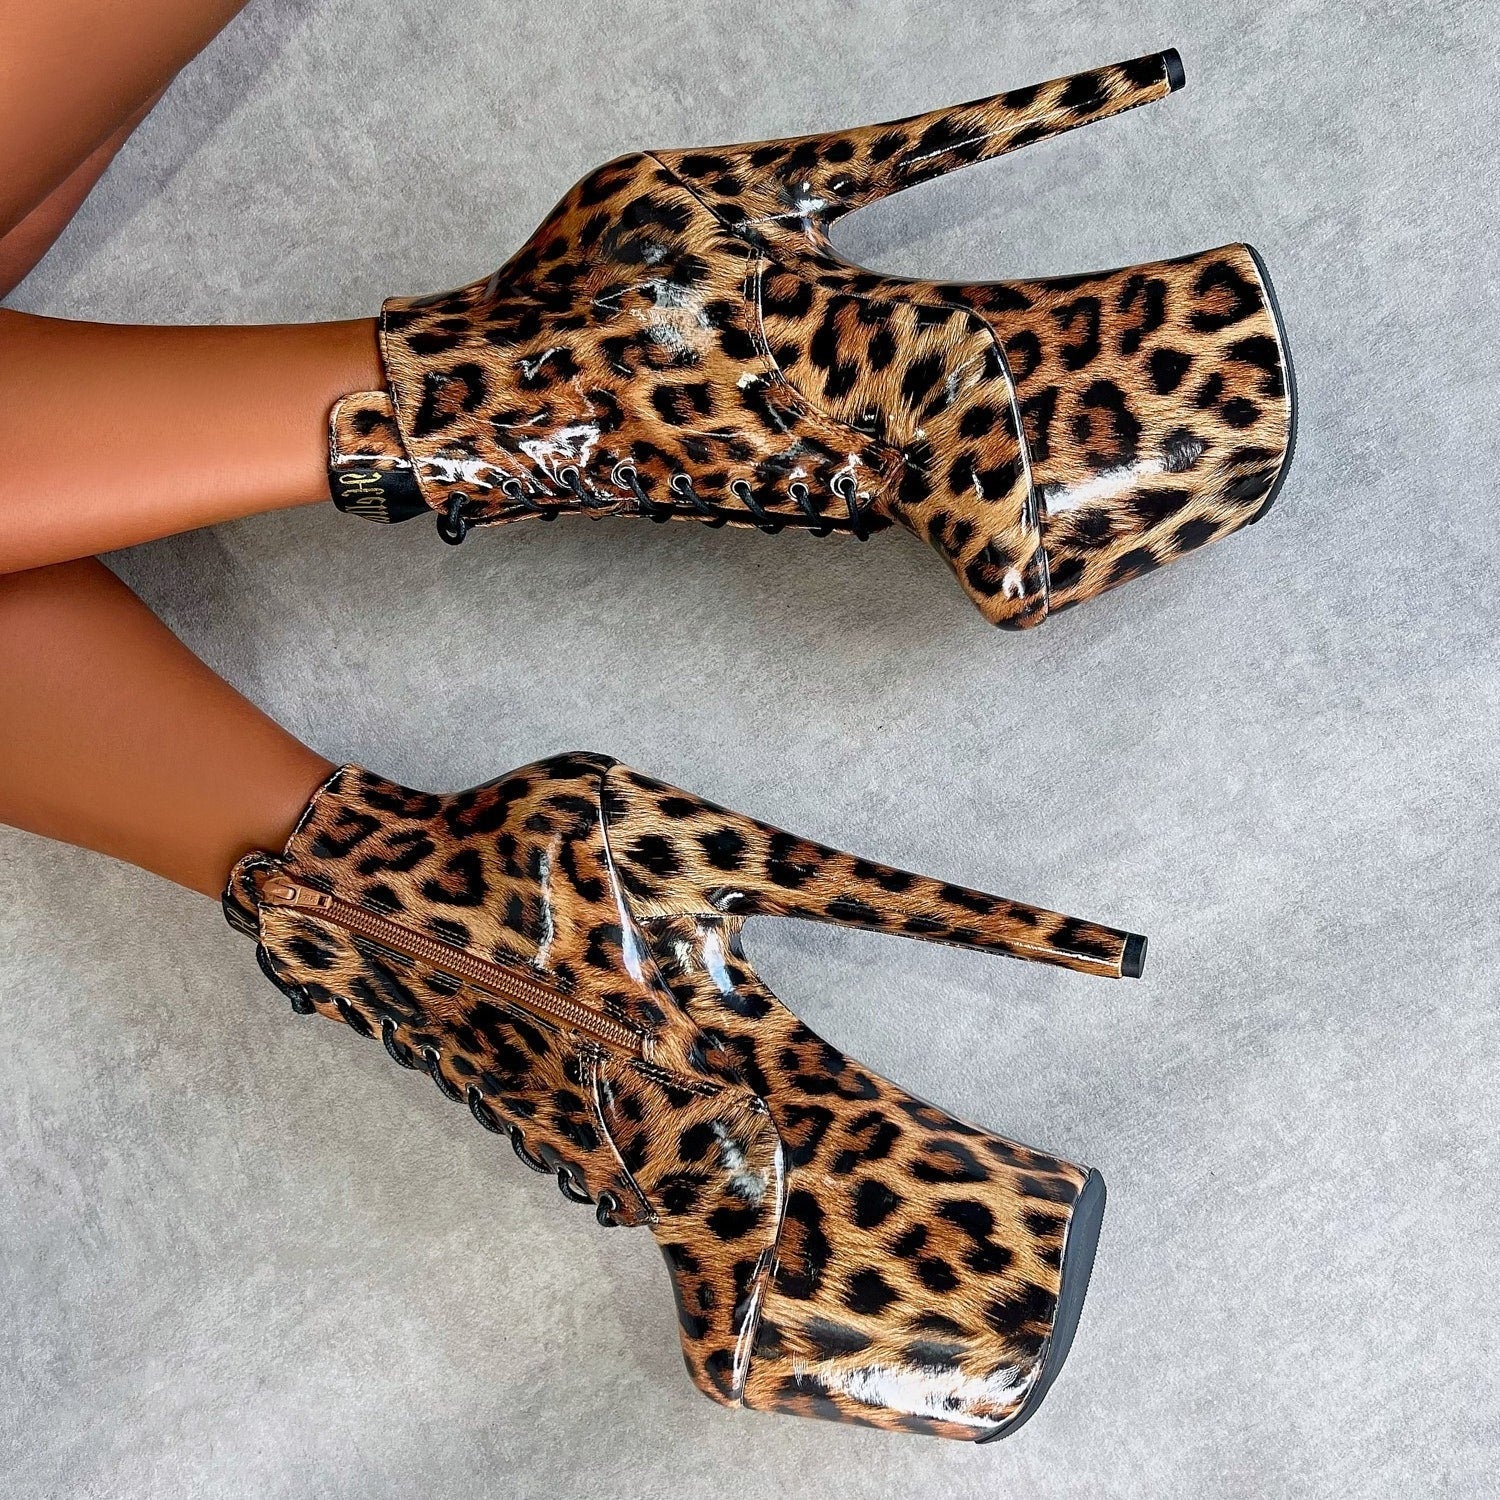 Leopard Ankle Boot - 8 INCH, stripper shoe, stripper heel, pole heel, not a pleaser, platform, dancer, pole dance, floor work